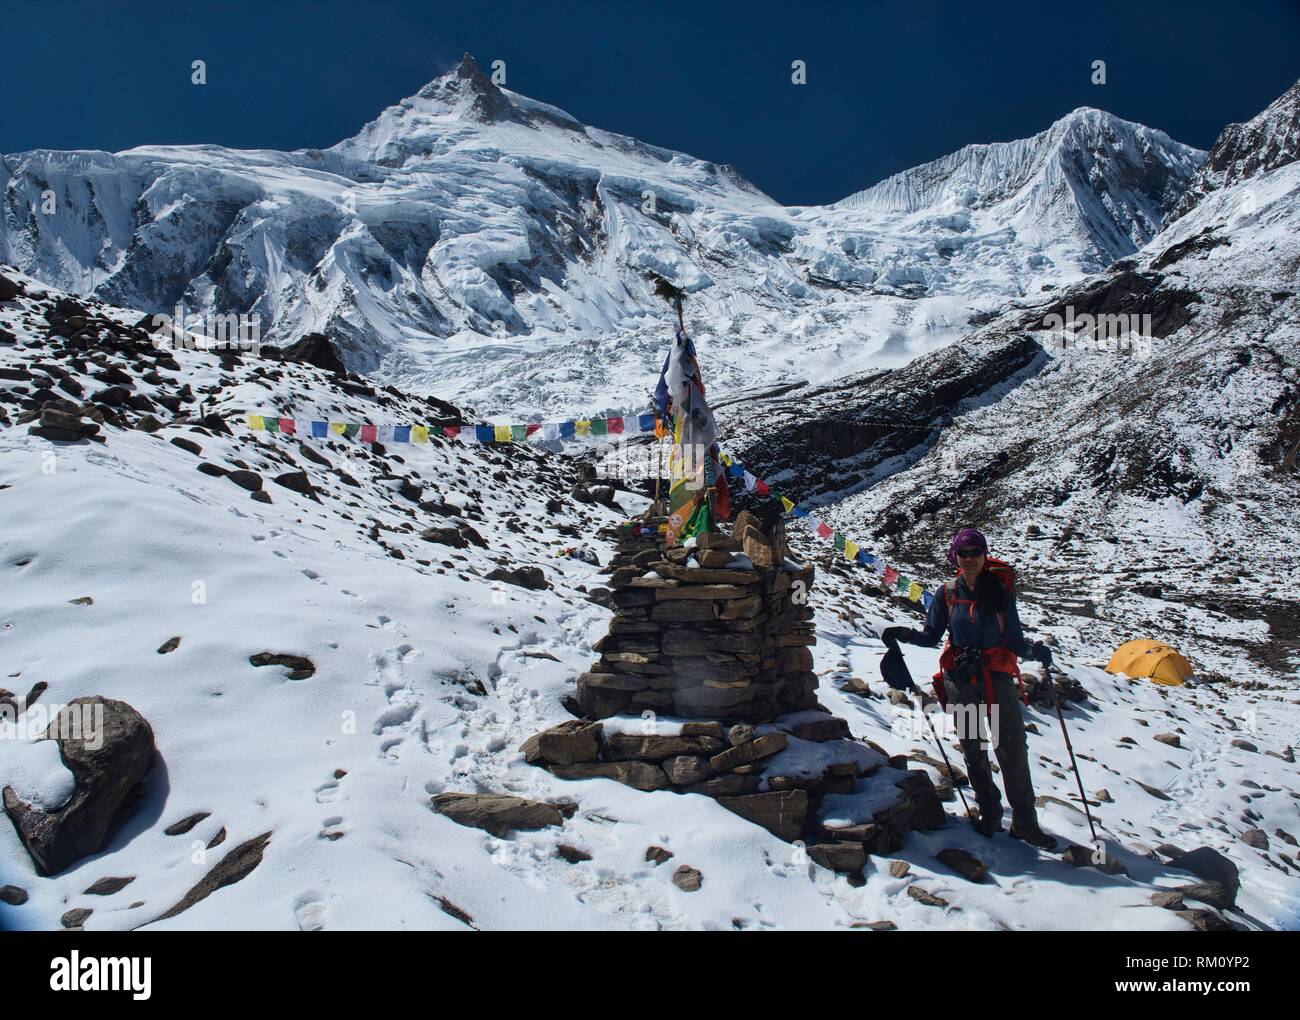 Manaslu, world's eighth highest peak (8,163 metres), seen from Manaslu Basecamp on the Manaslu Circuit Trail, Nepal. Stock Photo